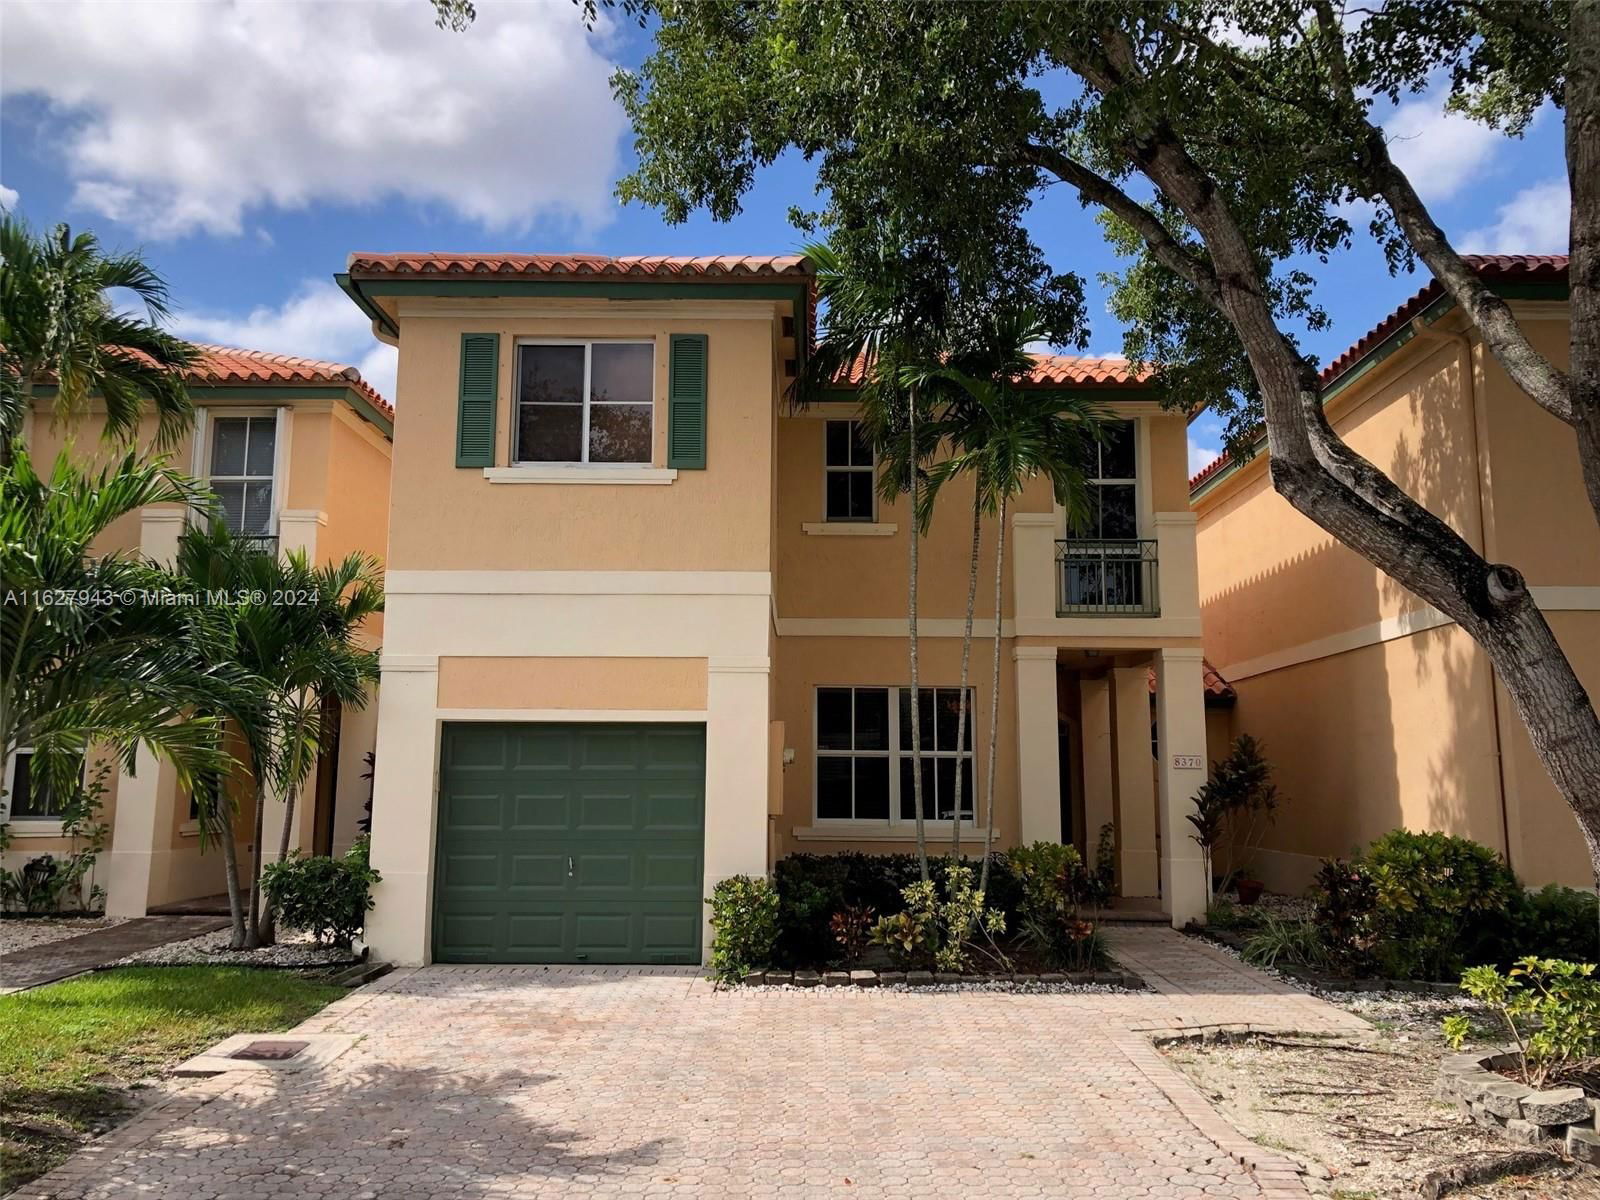 Real estate property located at 8370 144th St, Miami-Dade County, ANCHORAGE AT MIAMI LAKES, Miami Lakes, FL